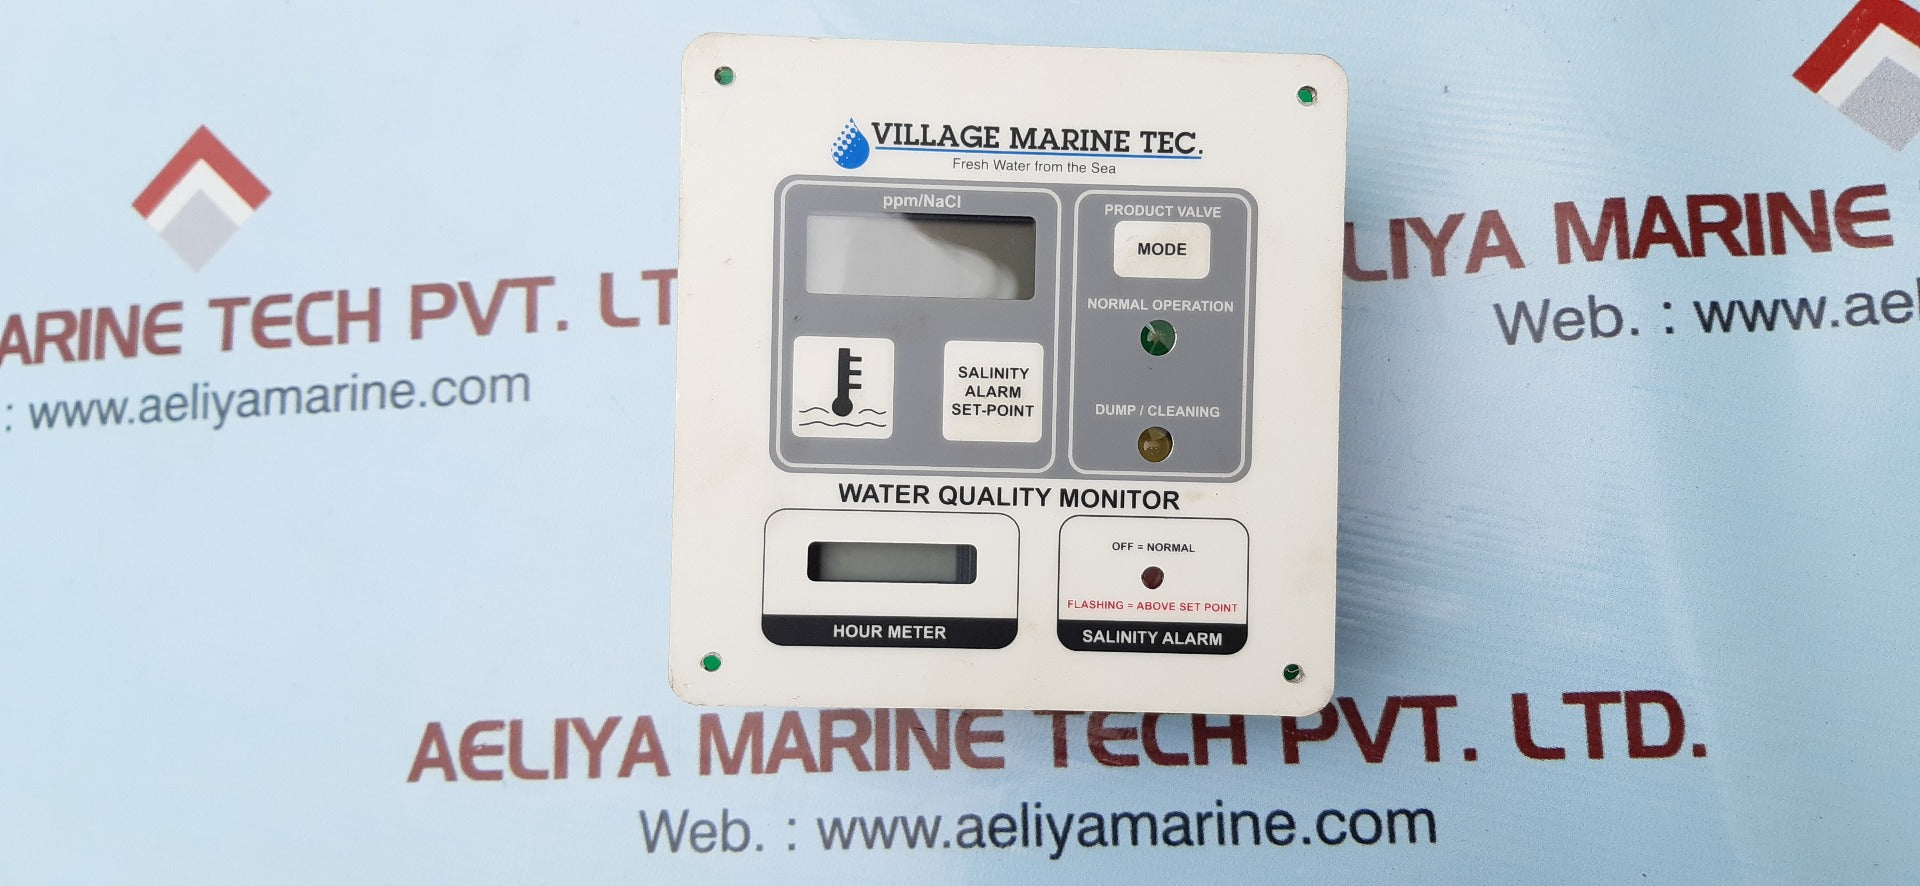 Village marine 40-4097 water quality monitor